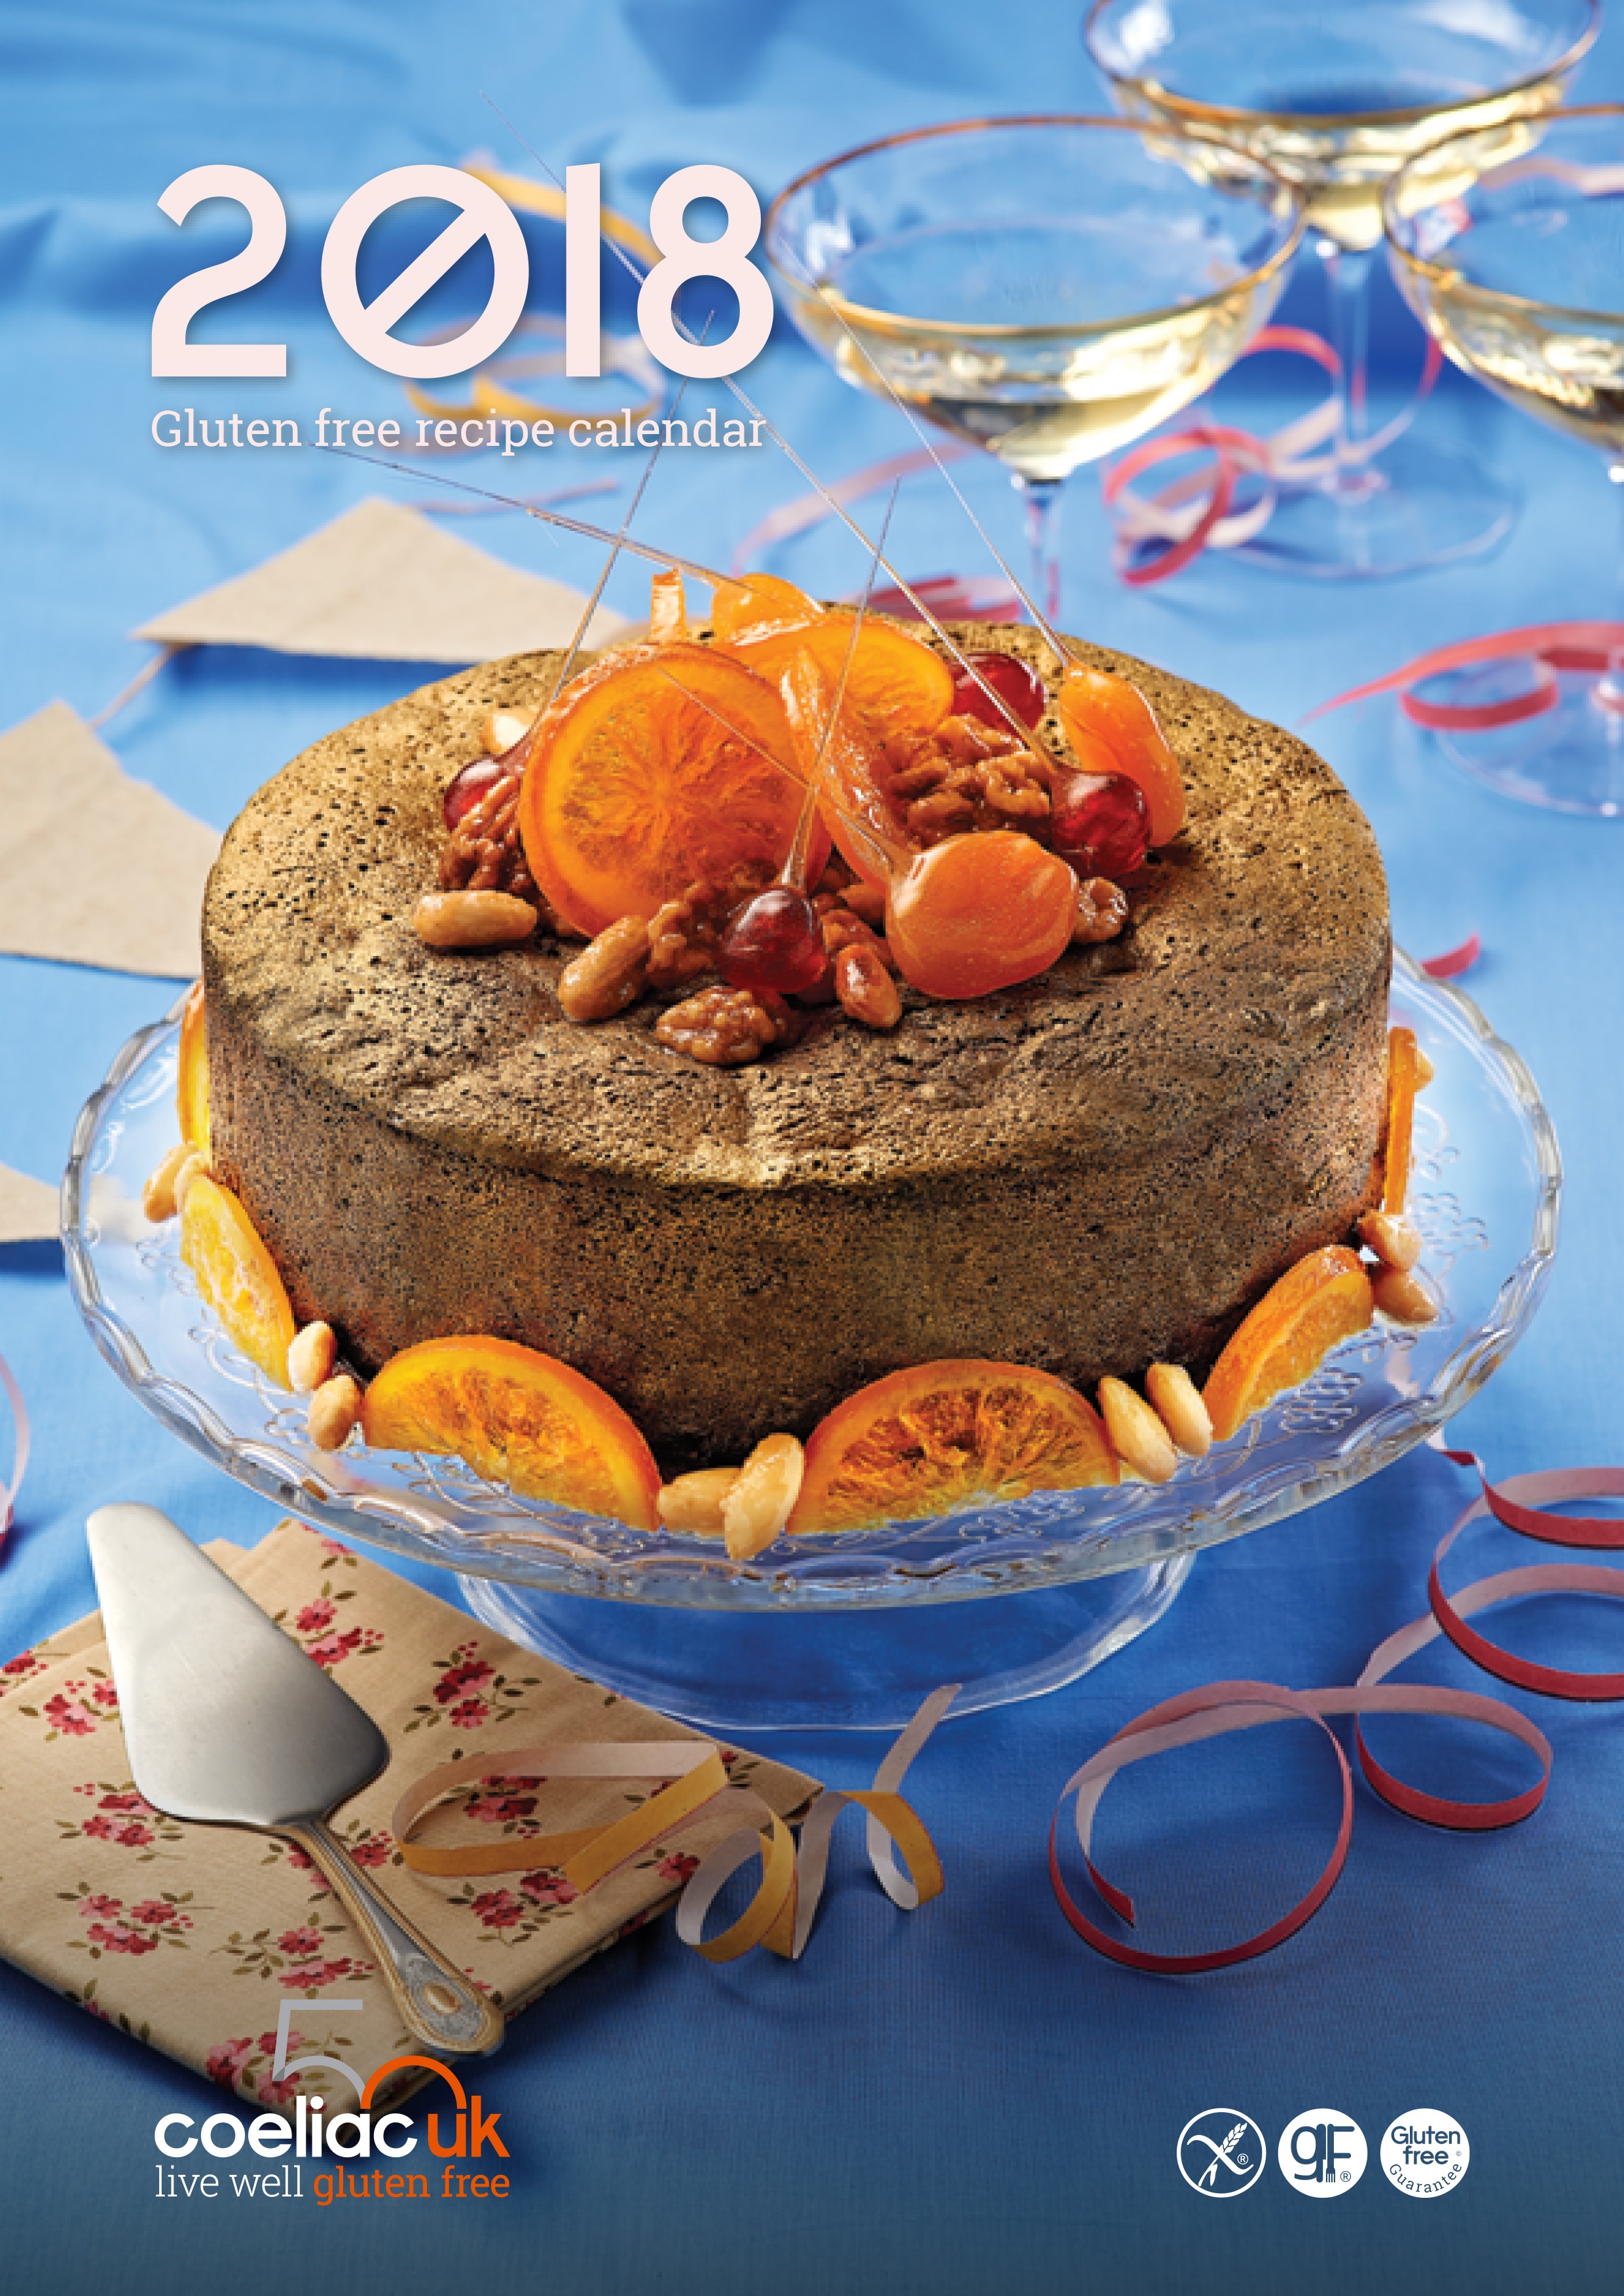 Coeliac UK launches celebrity gluten-free recipe calendar ahead of its 50th anniversary celebrations